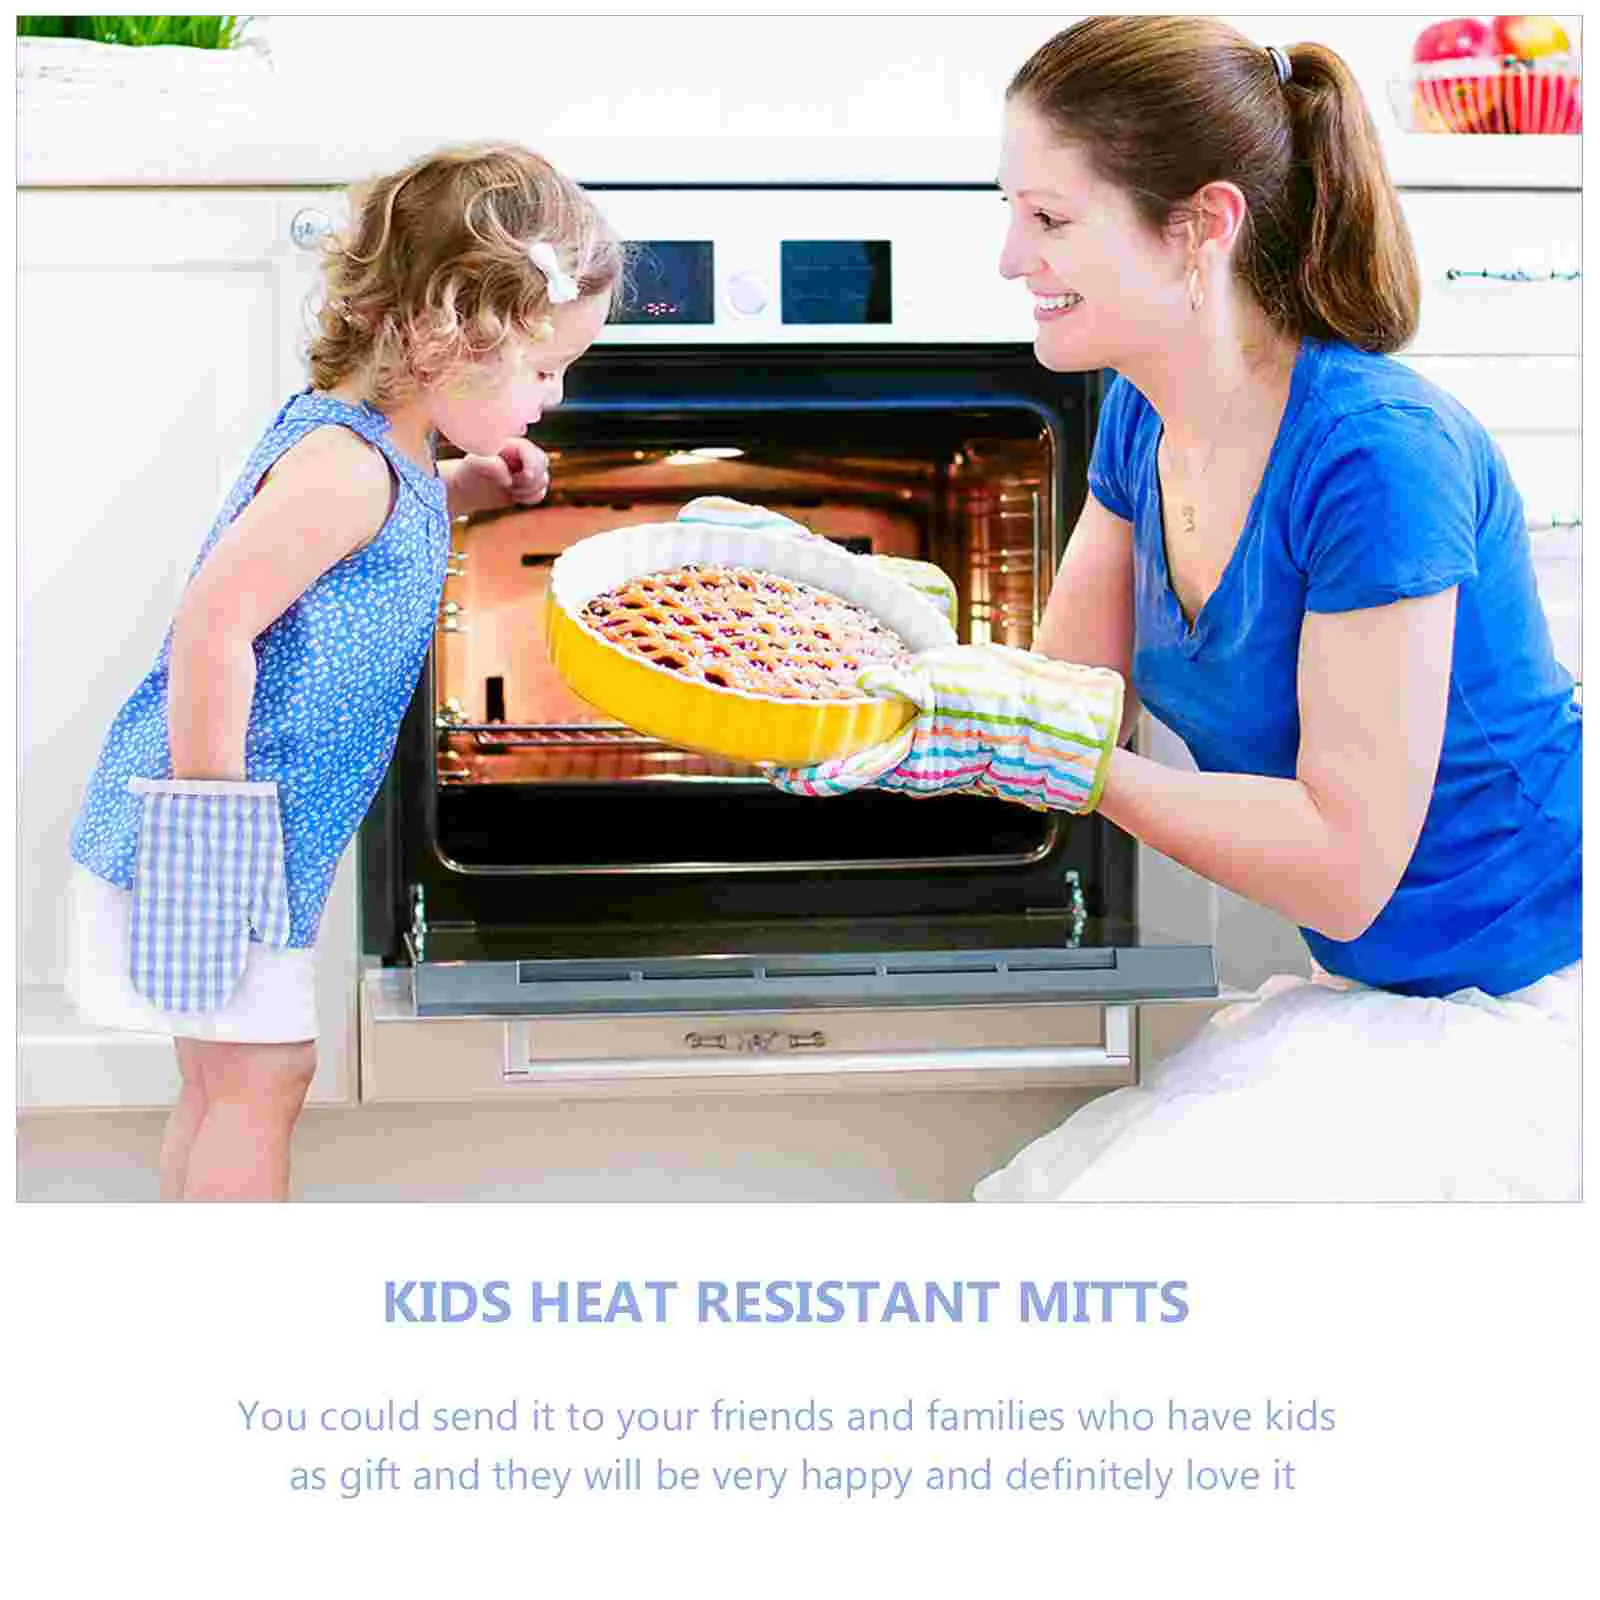 https://ae01.alicdn.com/kf/Se8a3f3e2ec27472e91c1c844eed001dd7/2-Pcs-Microwave-Gloves-Kitchen-Kids-Baking-Heat-Resistant-Mitts-Oven-Soccer-Toy-Insulation-Children-s.jpg